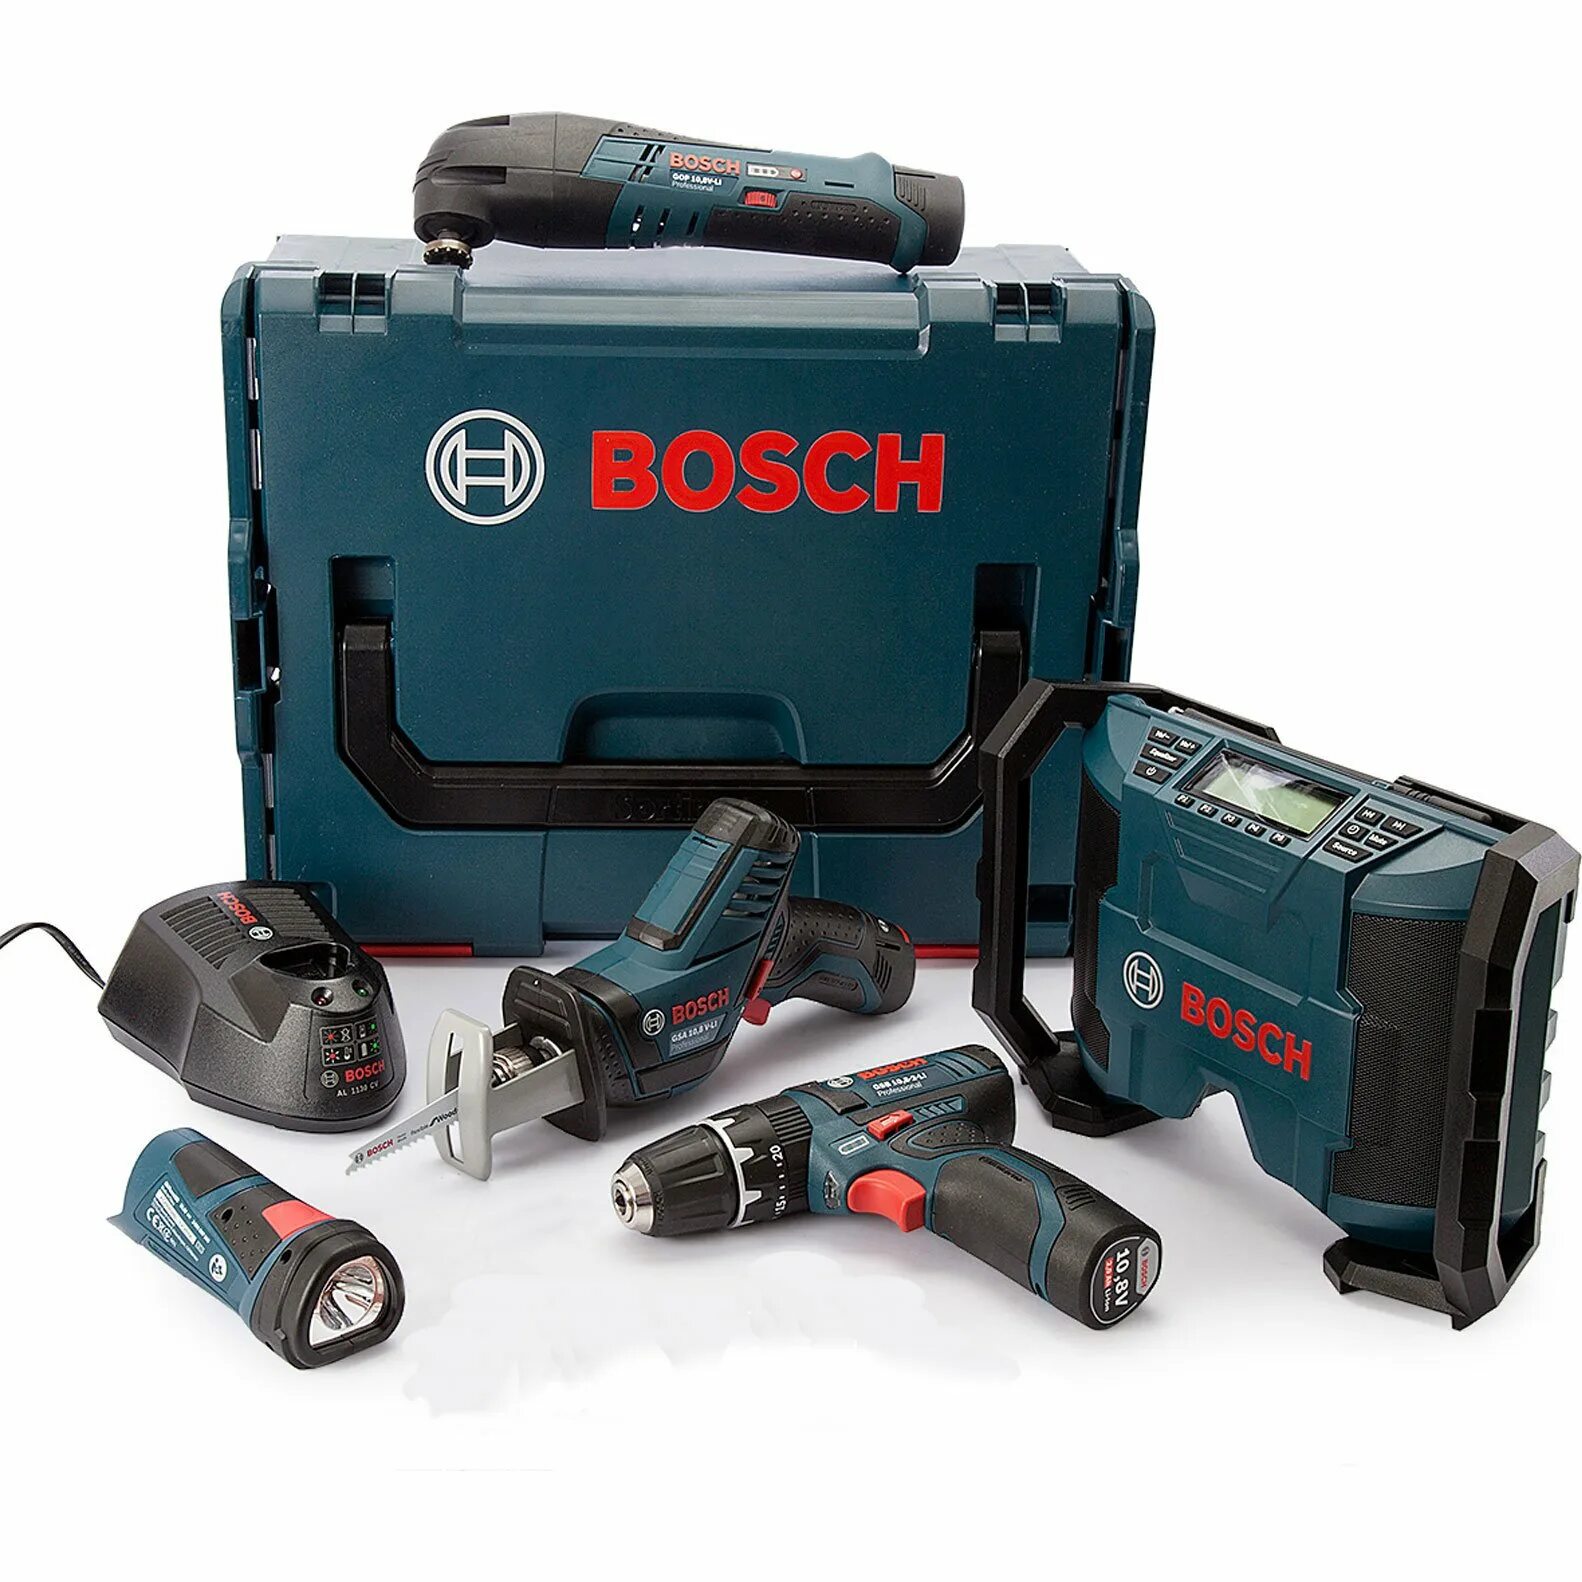 Bosch 12v инструмент. Аккумуляторный инструмент Bosch 12v. Bosch 12v комплекты. Шуруповерт Bosch professional Power Tools.